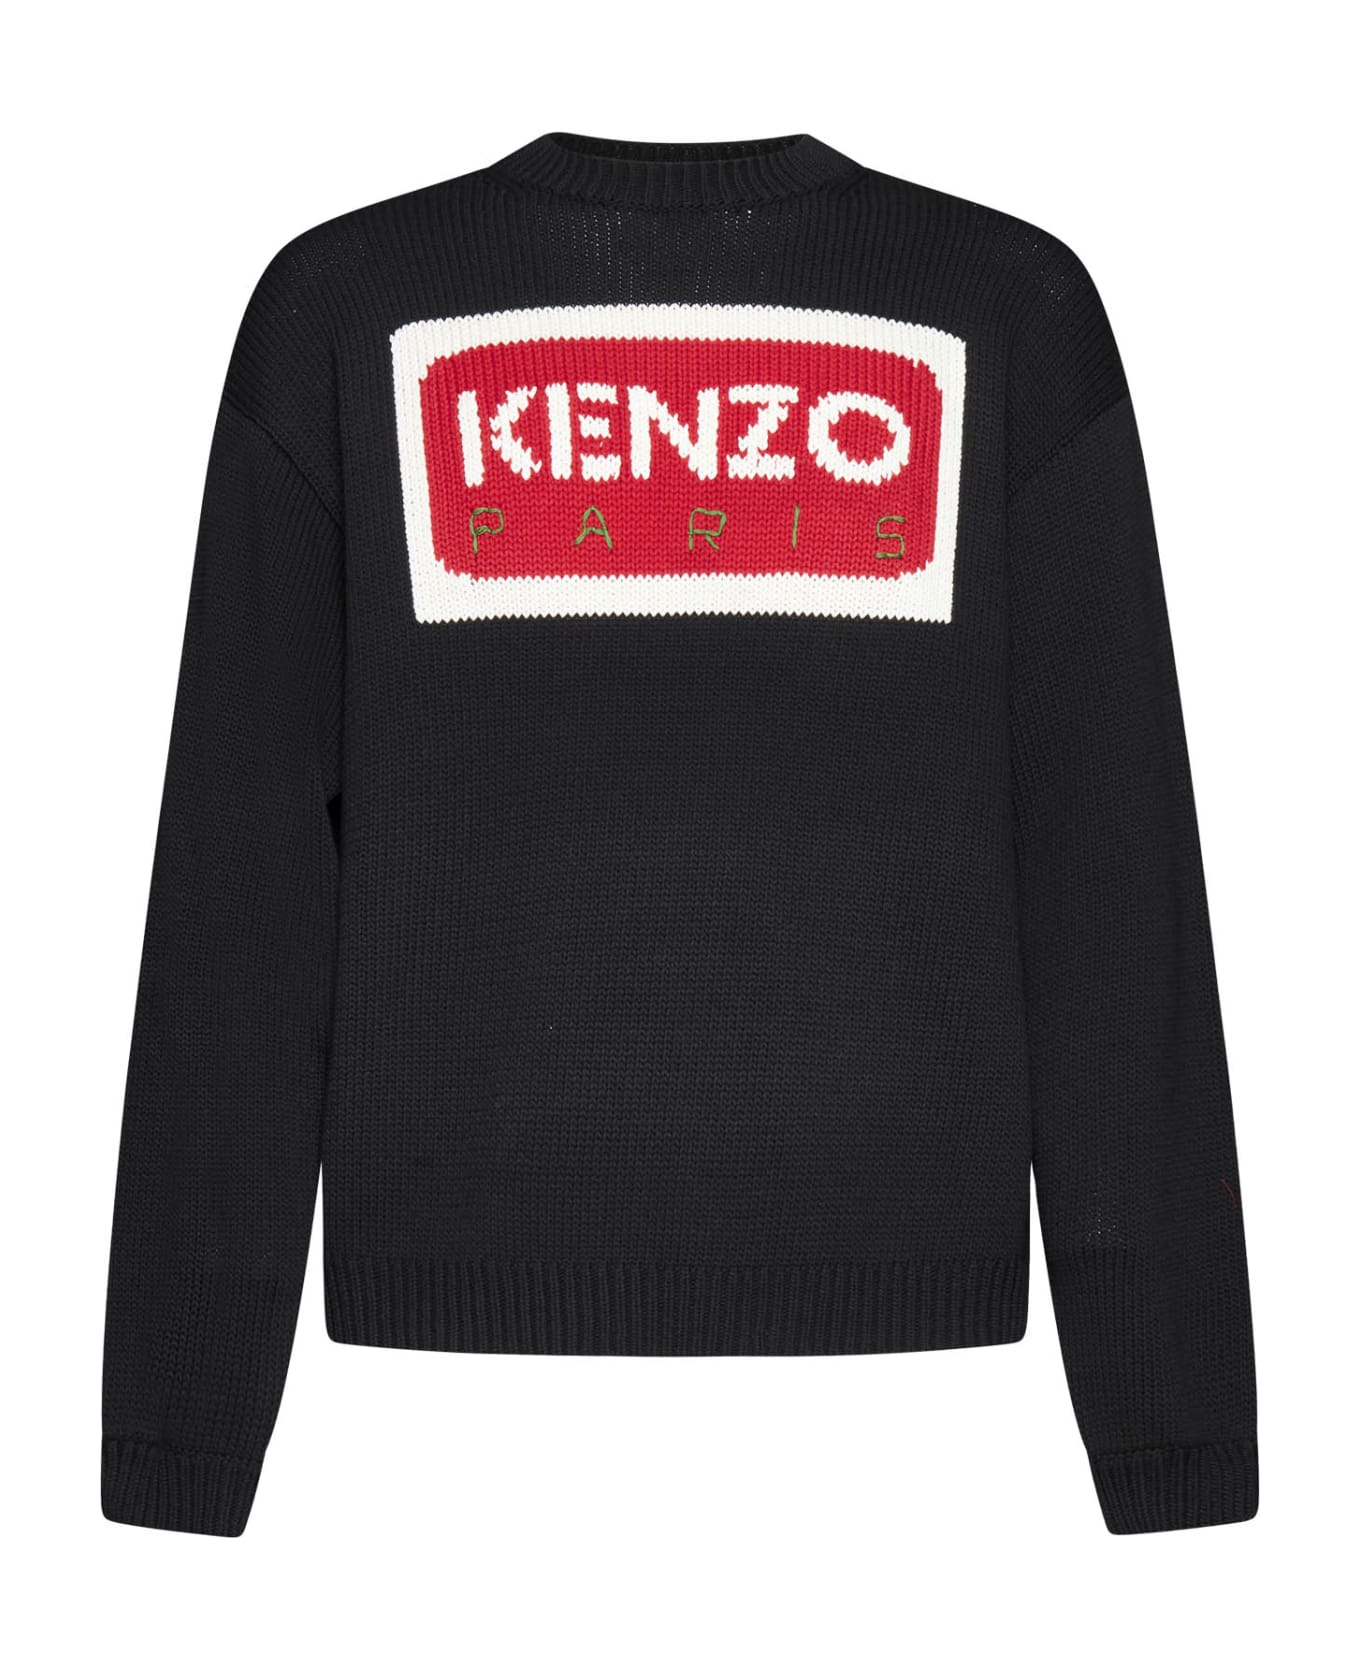 Kenzo ' Paris' Sweater - Black ニットウェア